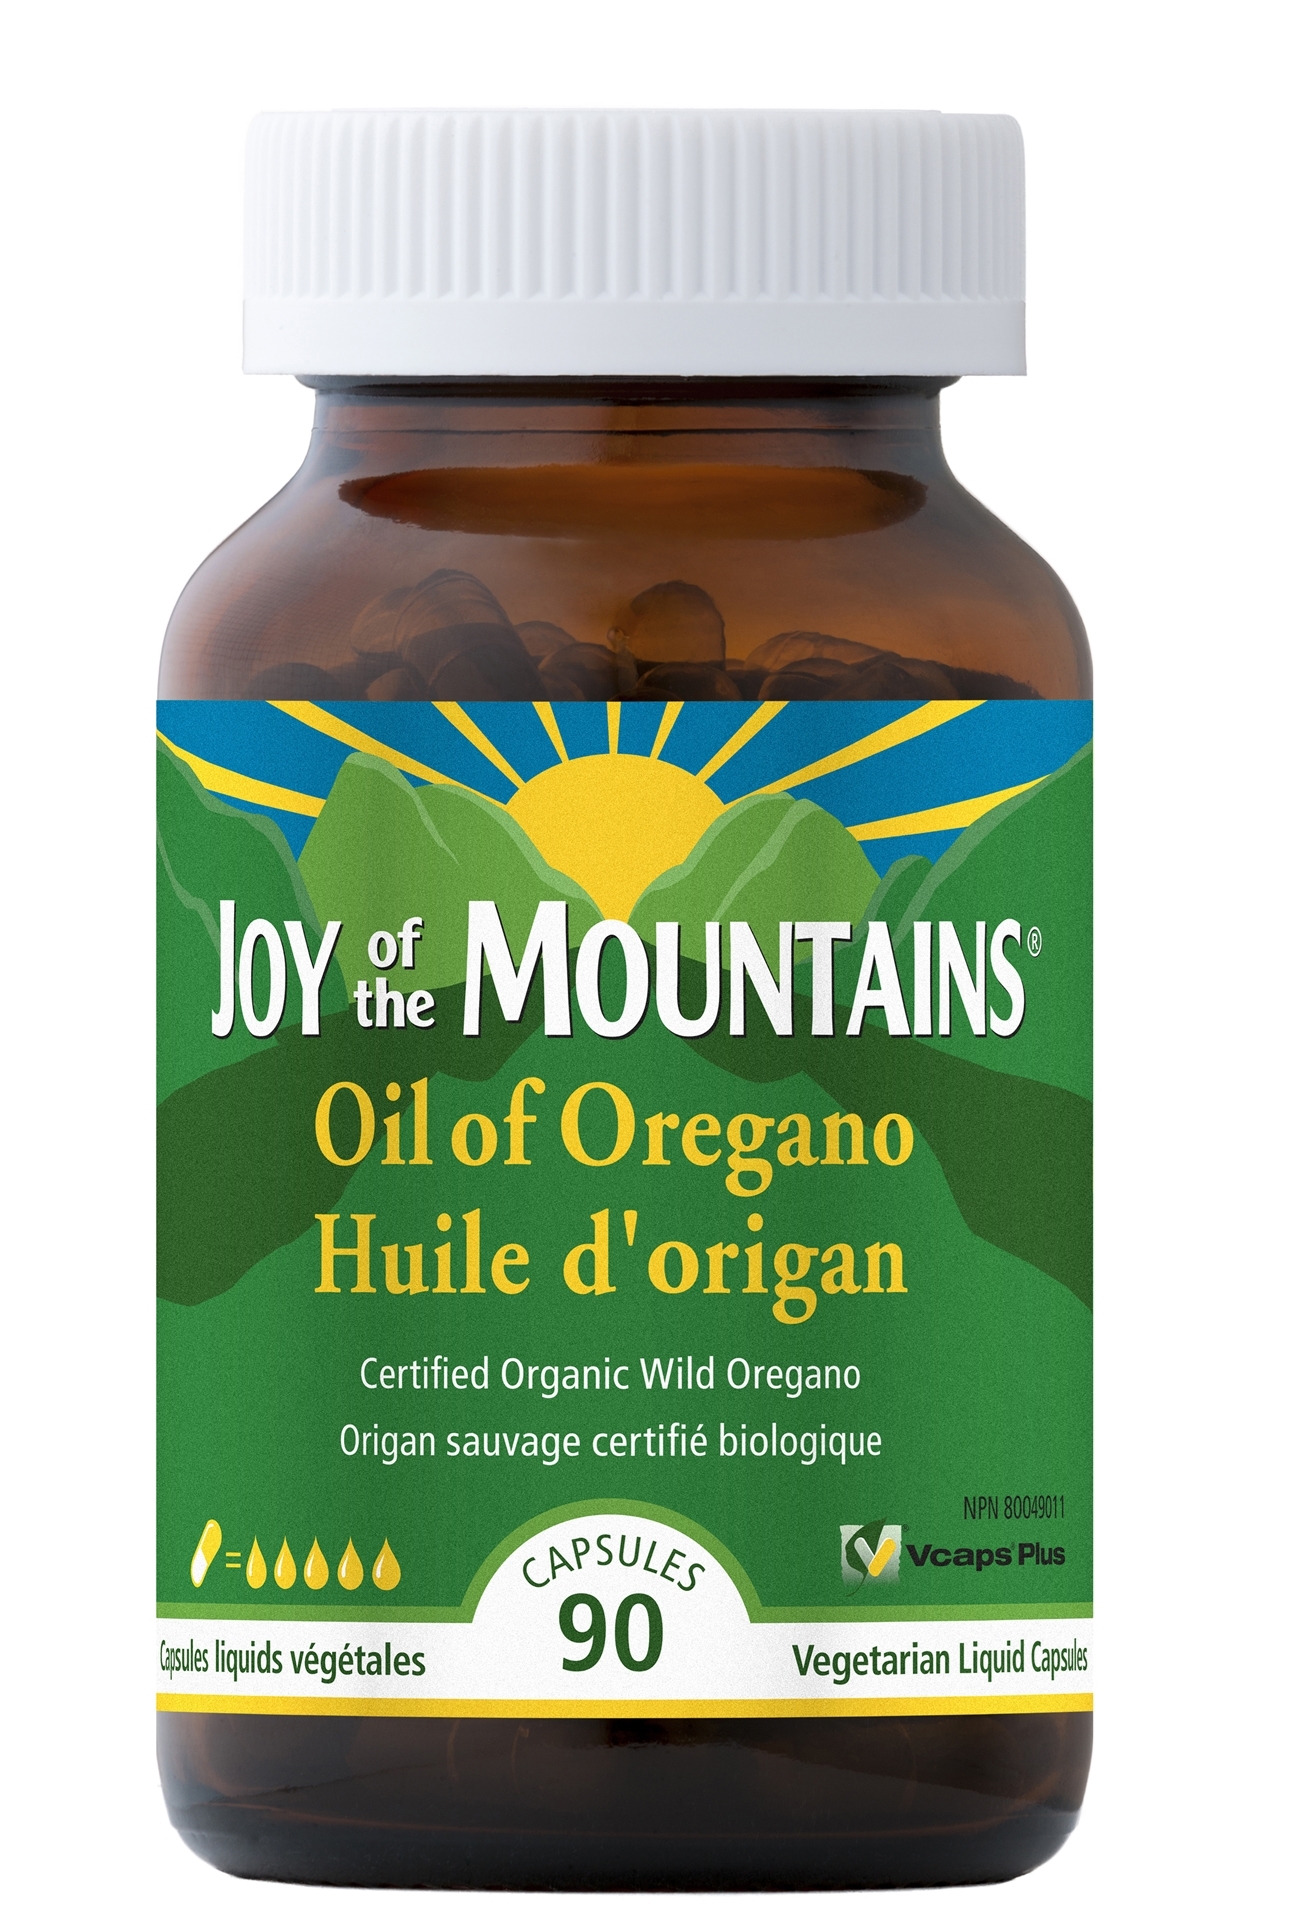 Joy of the Mountains Oil of Oregano Canada's online vitamin